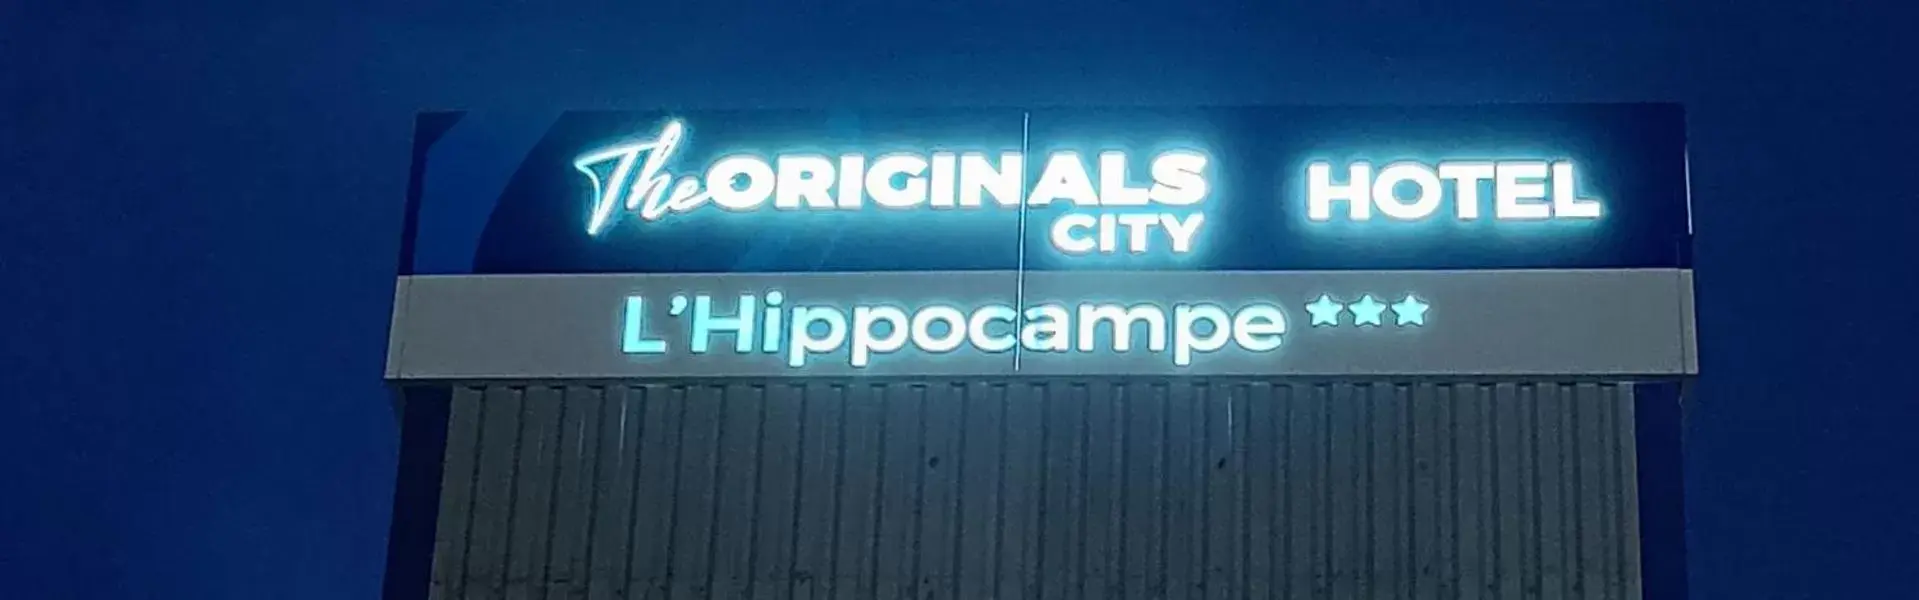 Property logo or sign in The Originals City, Hôtel L'Hippocampe, Sète Balaruc-le-Vieux